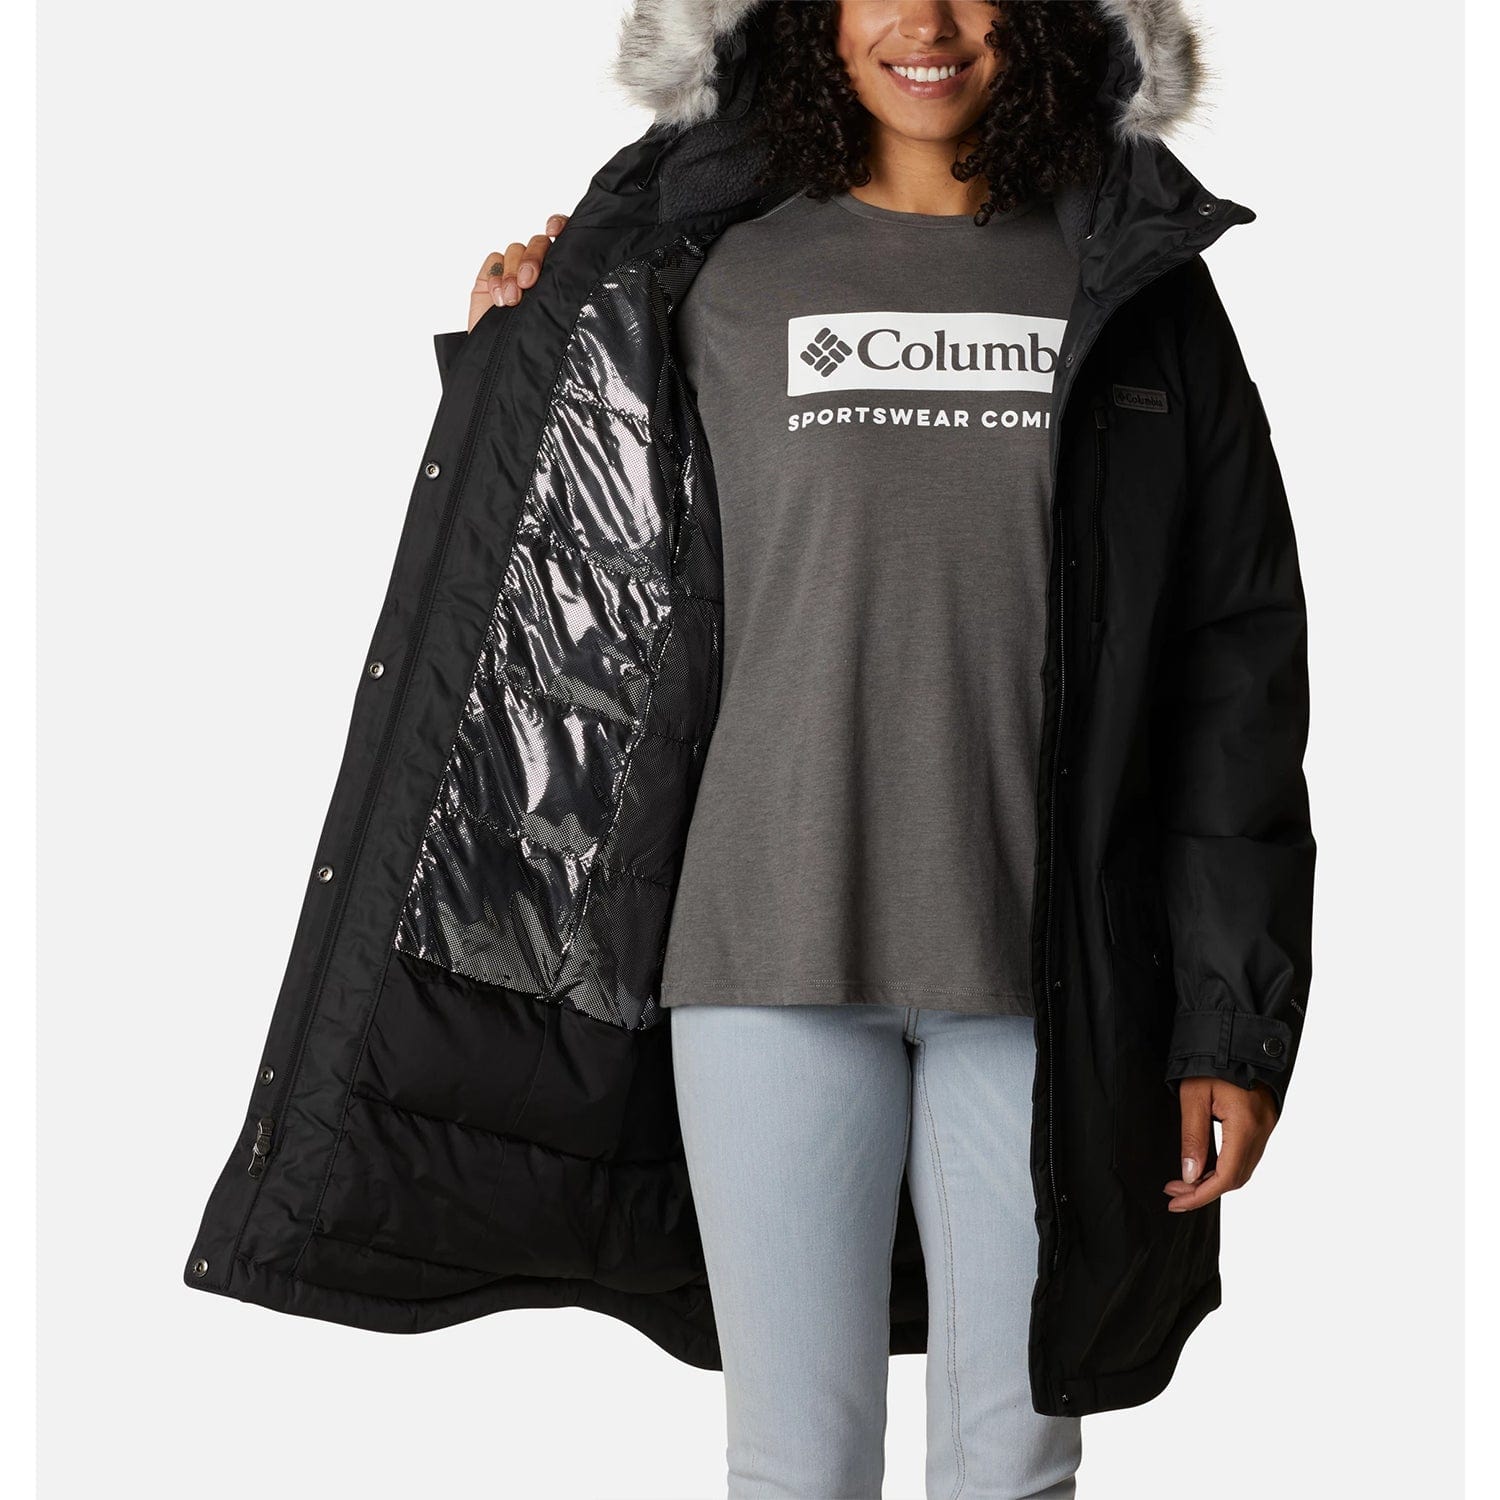 Columbia Suttle Mountain Long Insulated Jacket - Women's – Campmor